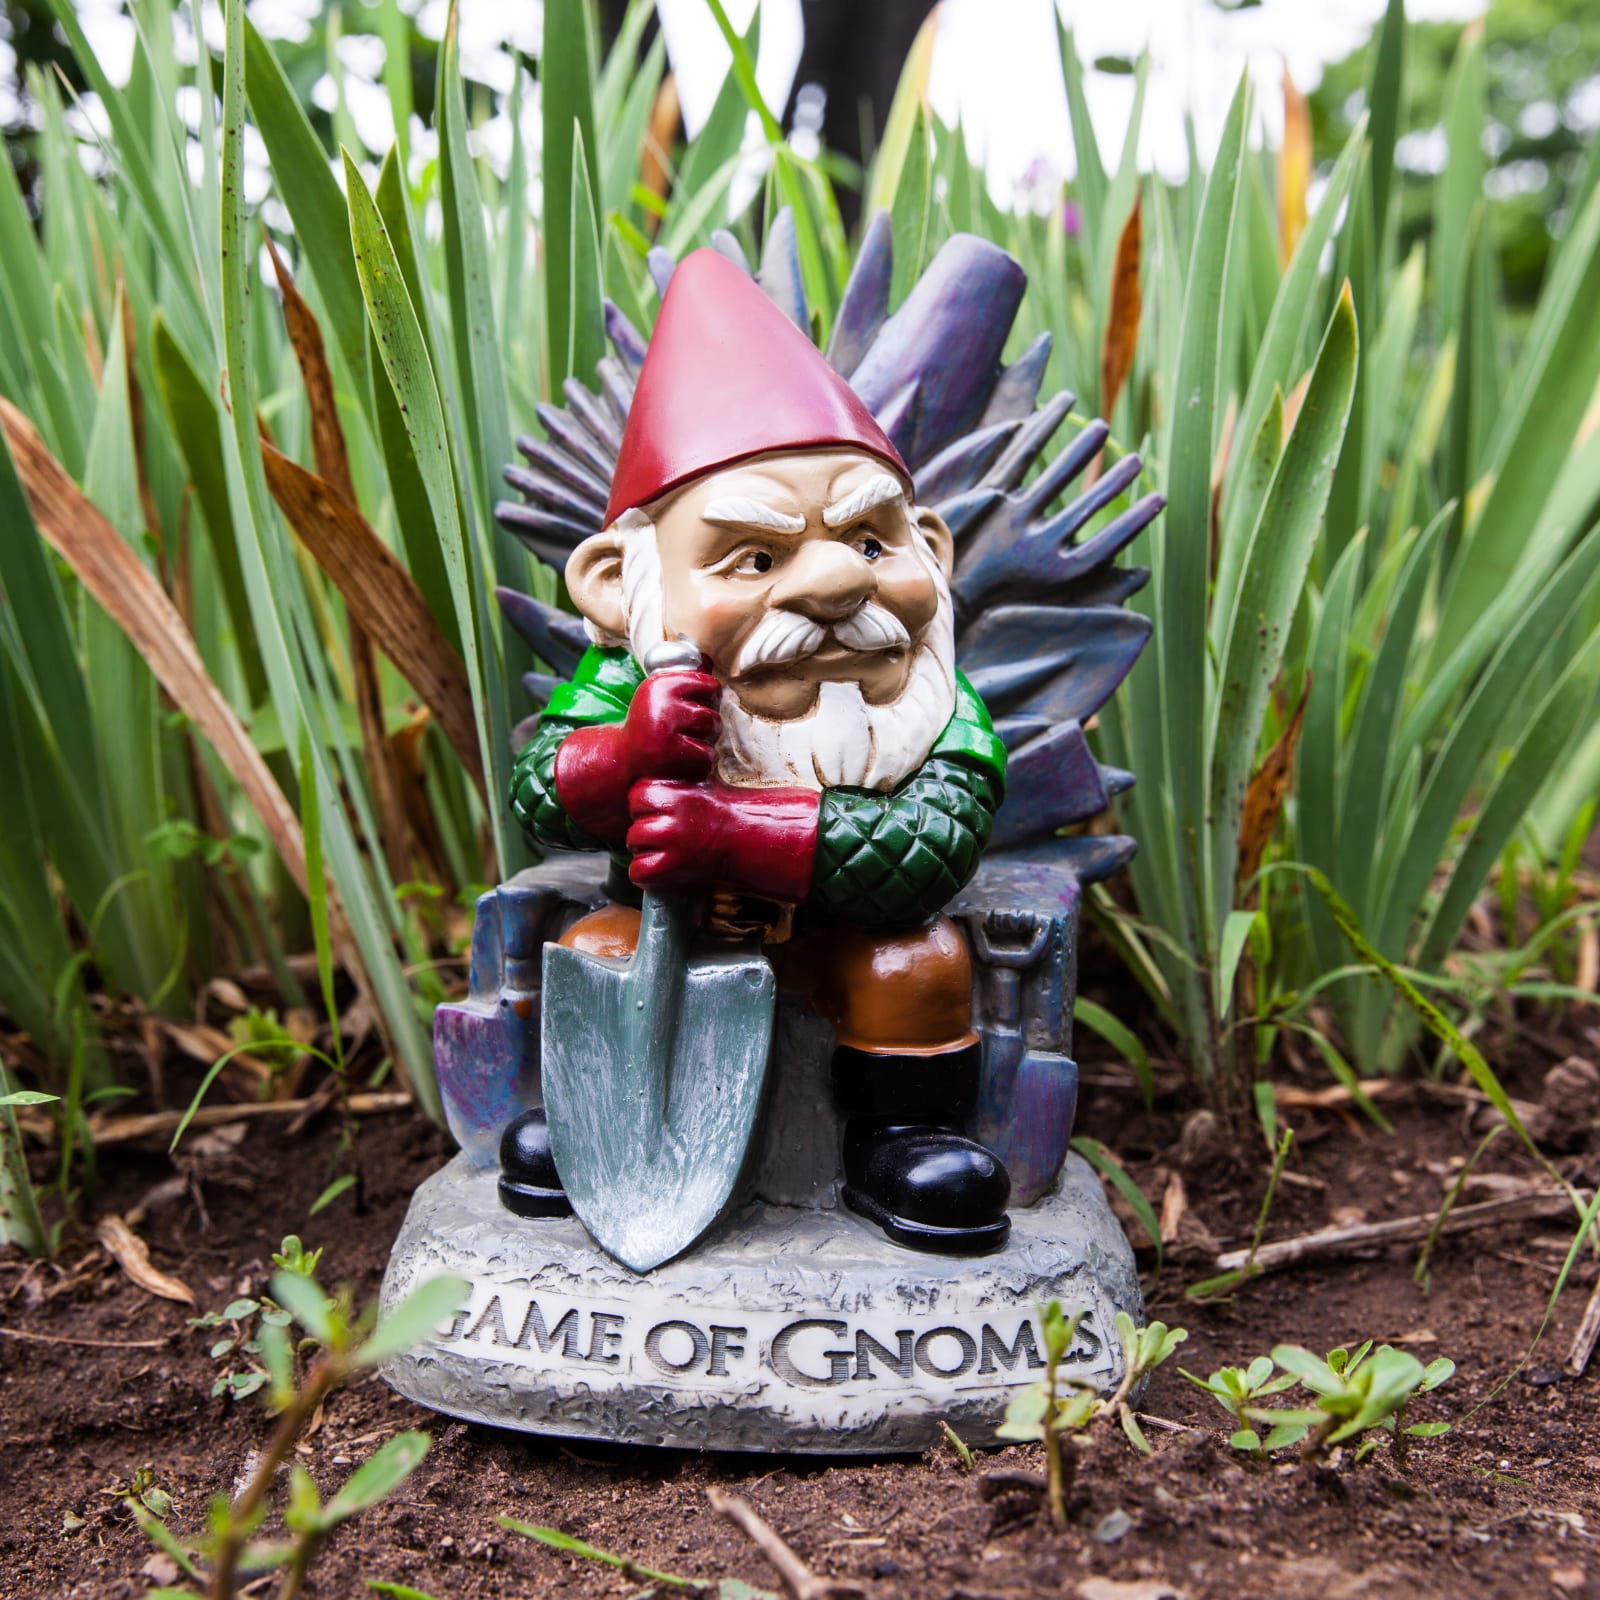 The Game of Gnomes Garden Gnome